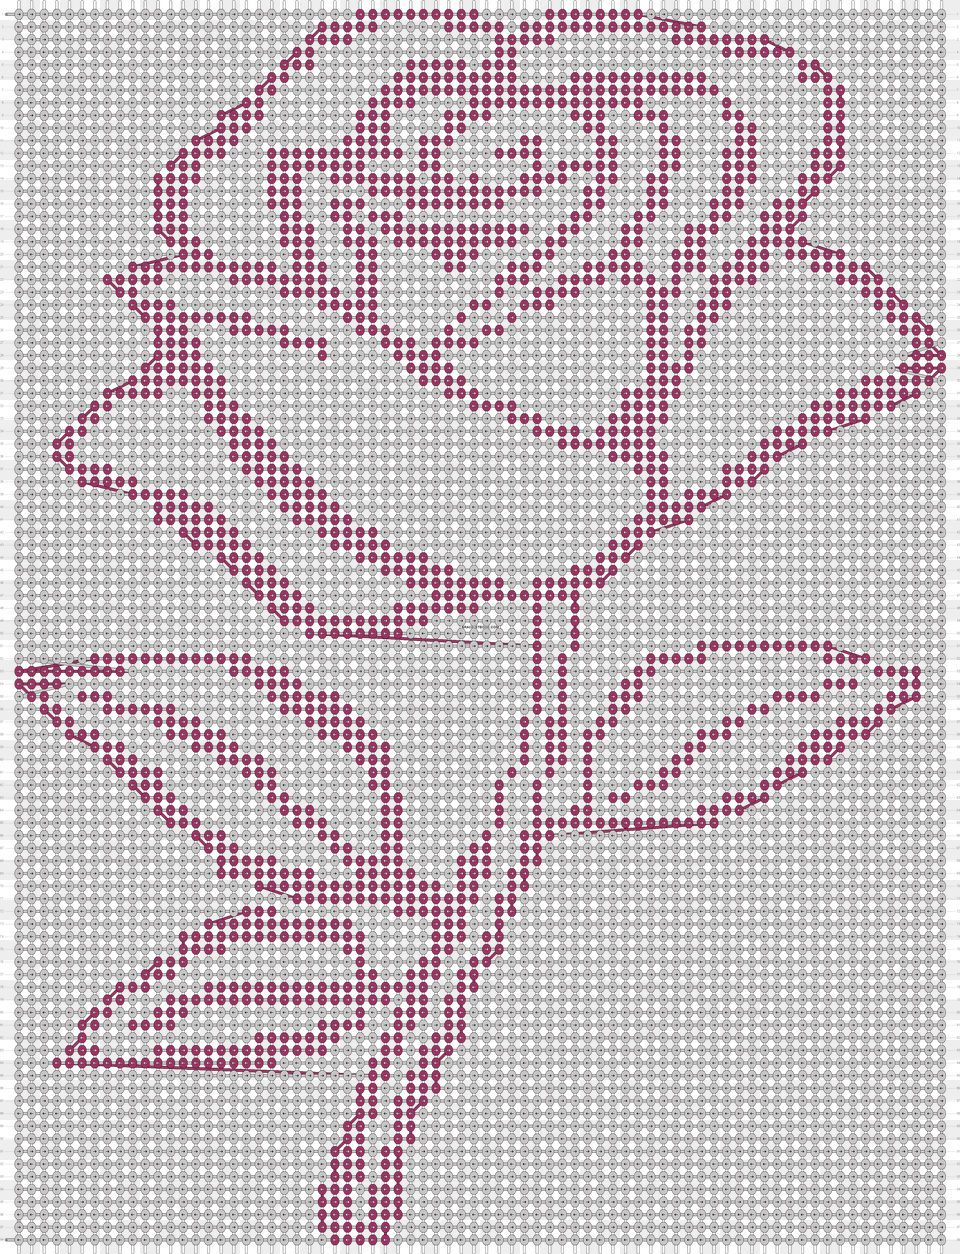 Alpha Pattern Flower Braceletbook Alpha Friendship Bracelet Patterns, Embroidery, Stitch, Person, Home Decor Png